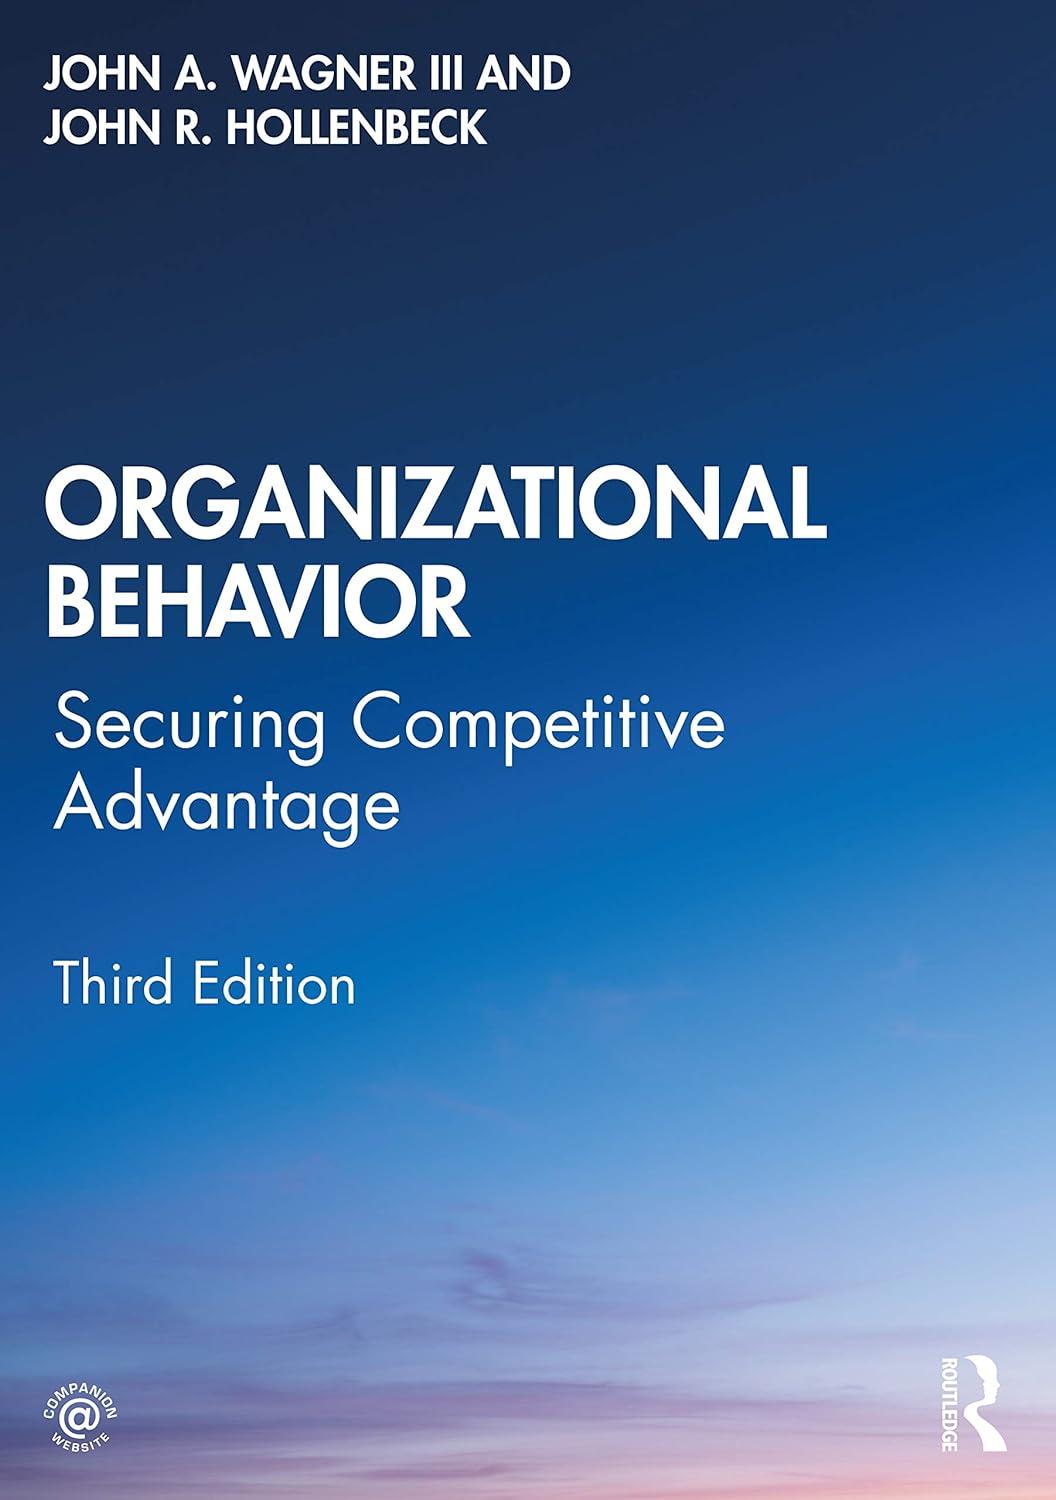 organizational behavior securing competitive advantage 3rd edition john a. wagner iii, john r hollenbeck